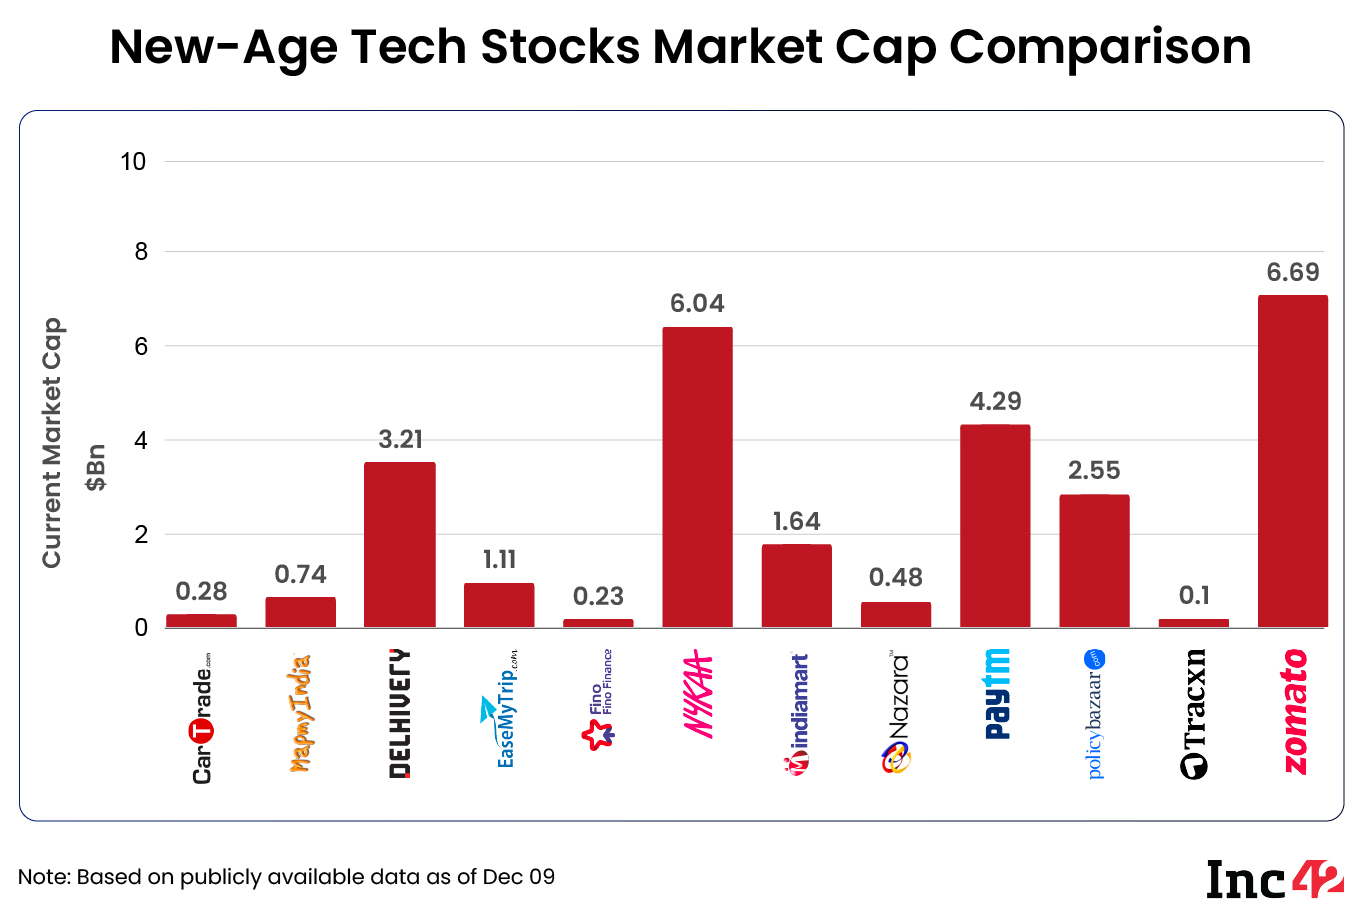 New-age tech stock market cap comparison